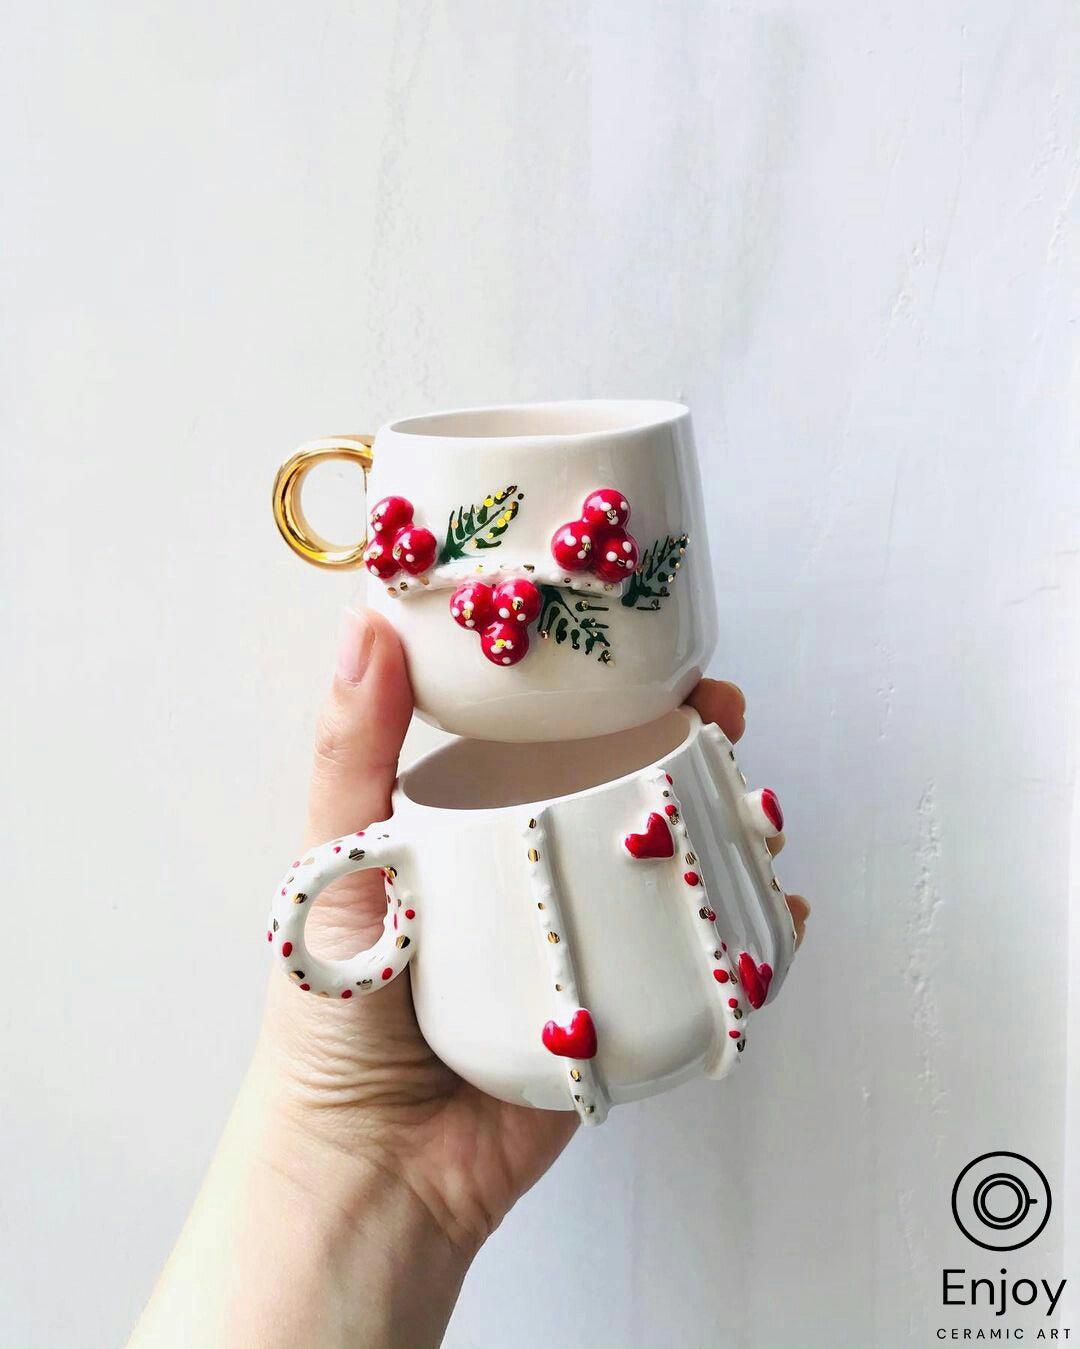 Handmade 'Love Way' Red Heart-Shaped Espresso Cup & Saucer Set - 5.4 oz, Ceramic Valentine's Espresso Mugs, Perfect Gift for Her